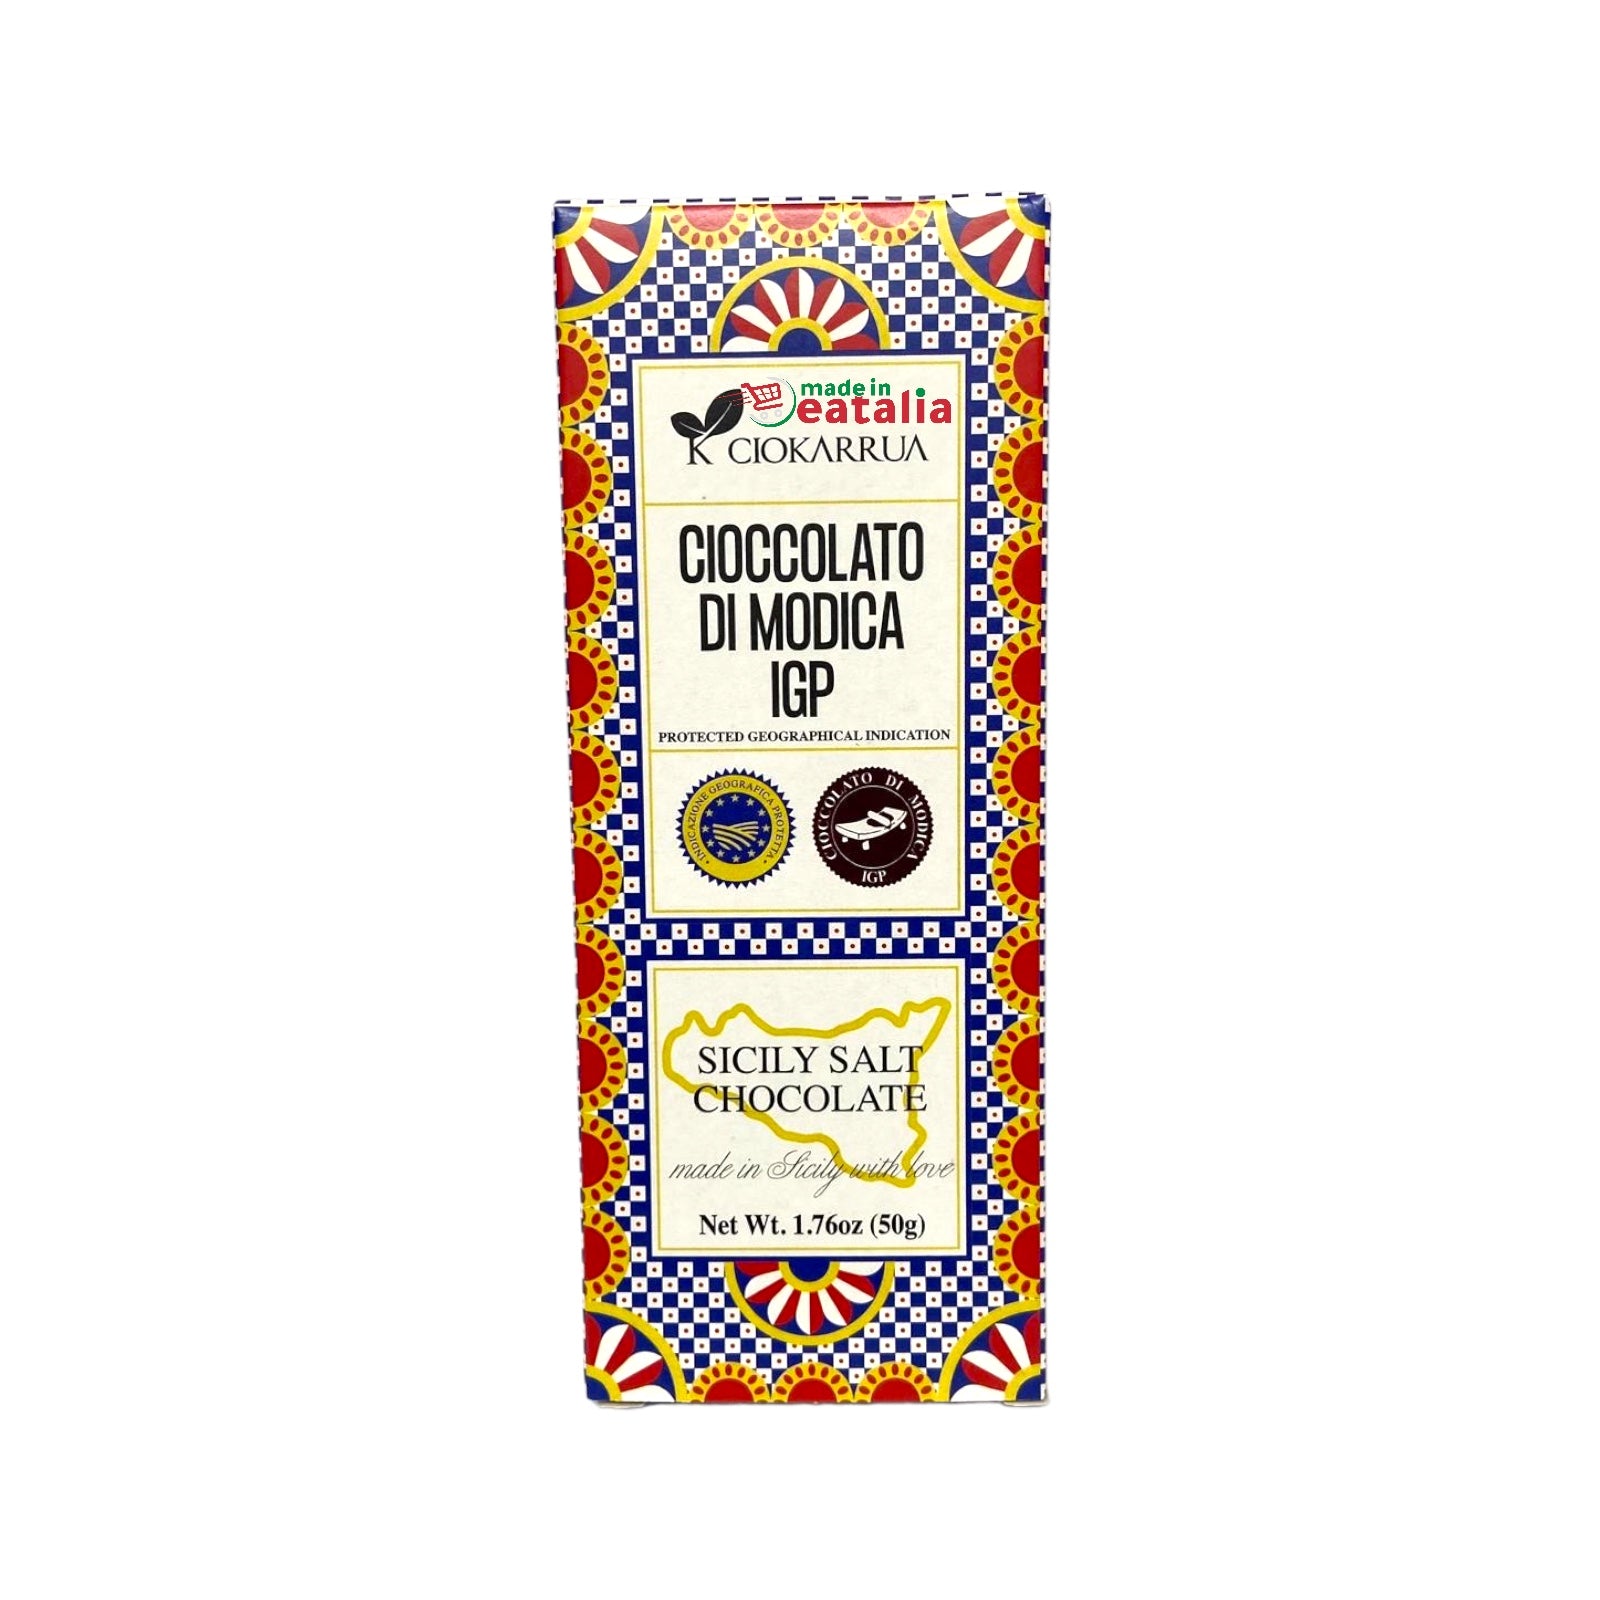 Ciokarrua PGI Modica Chocolate 
Sicilian Salt 50g